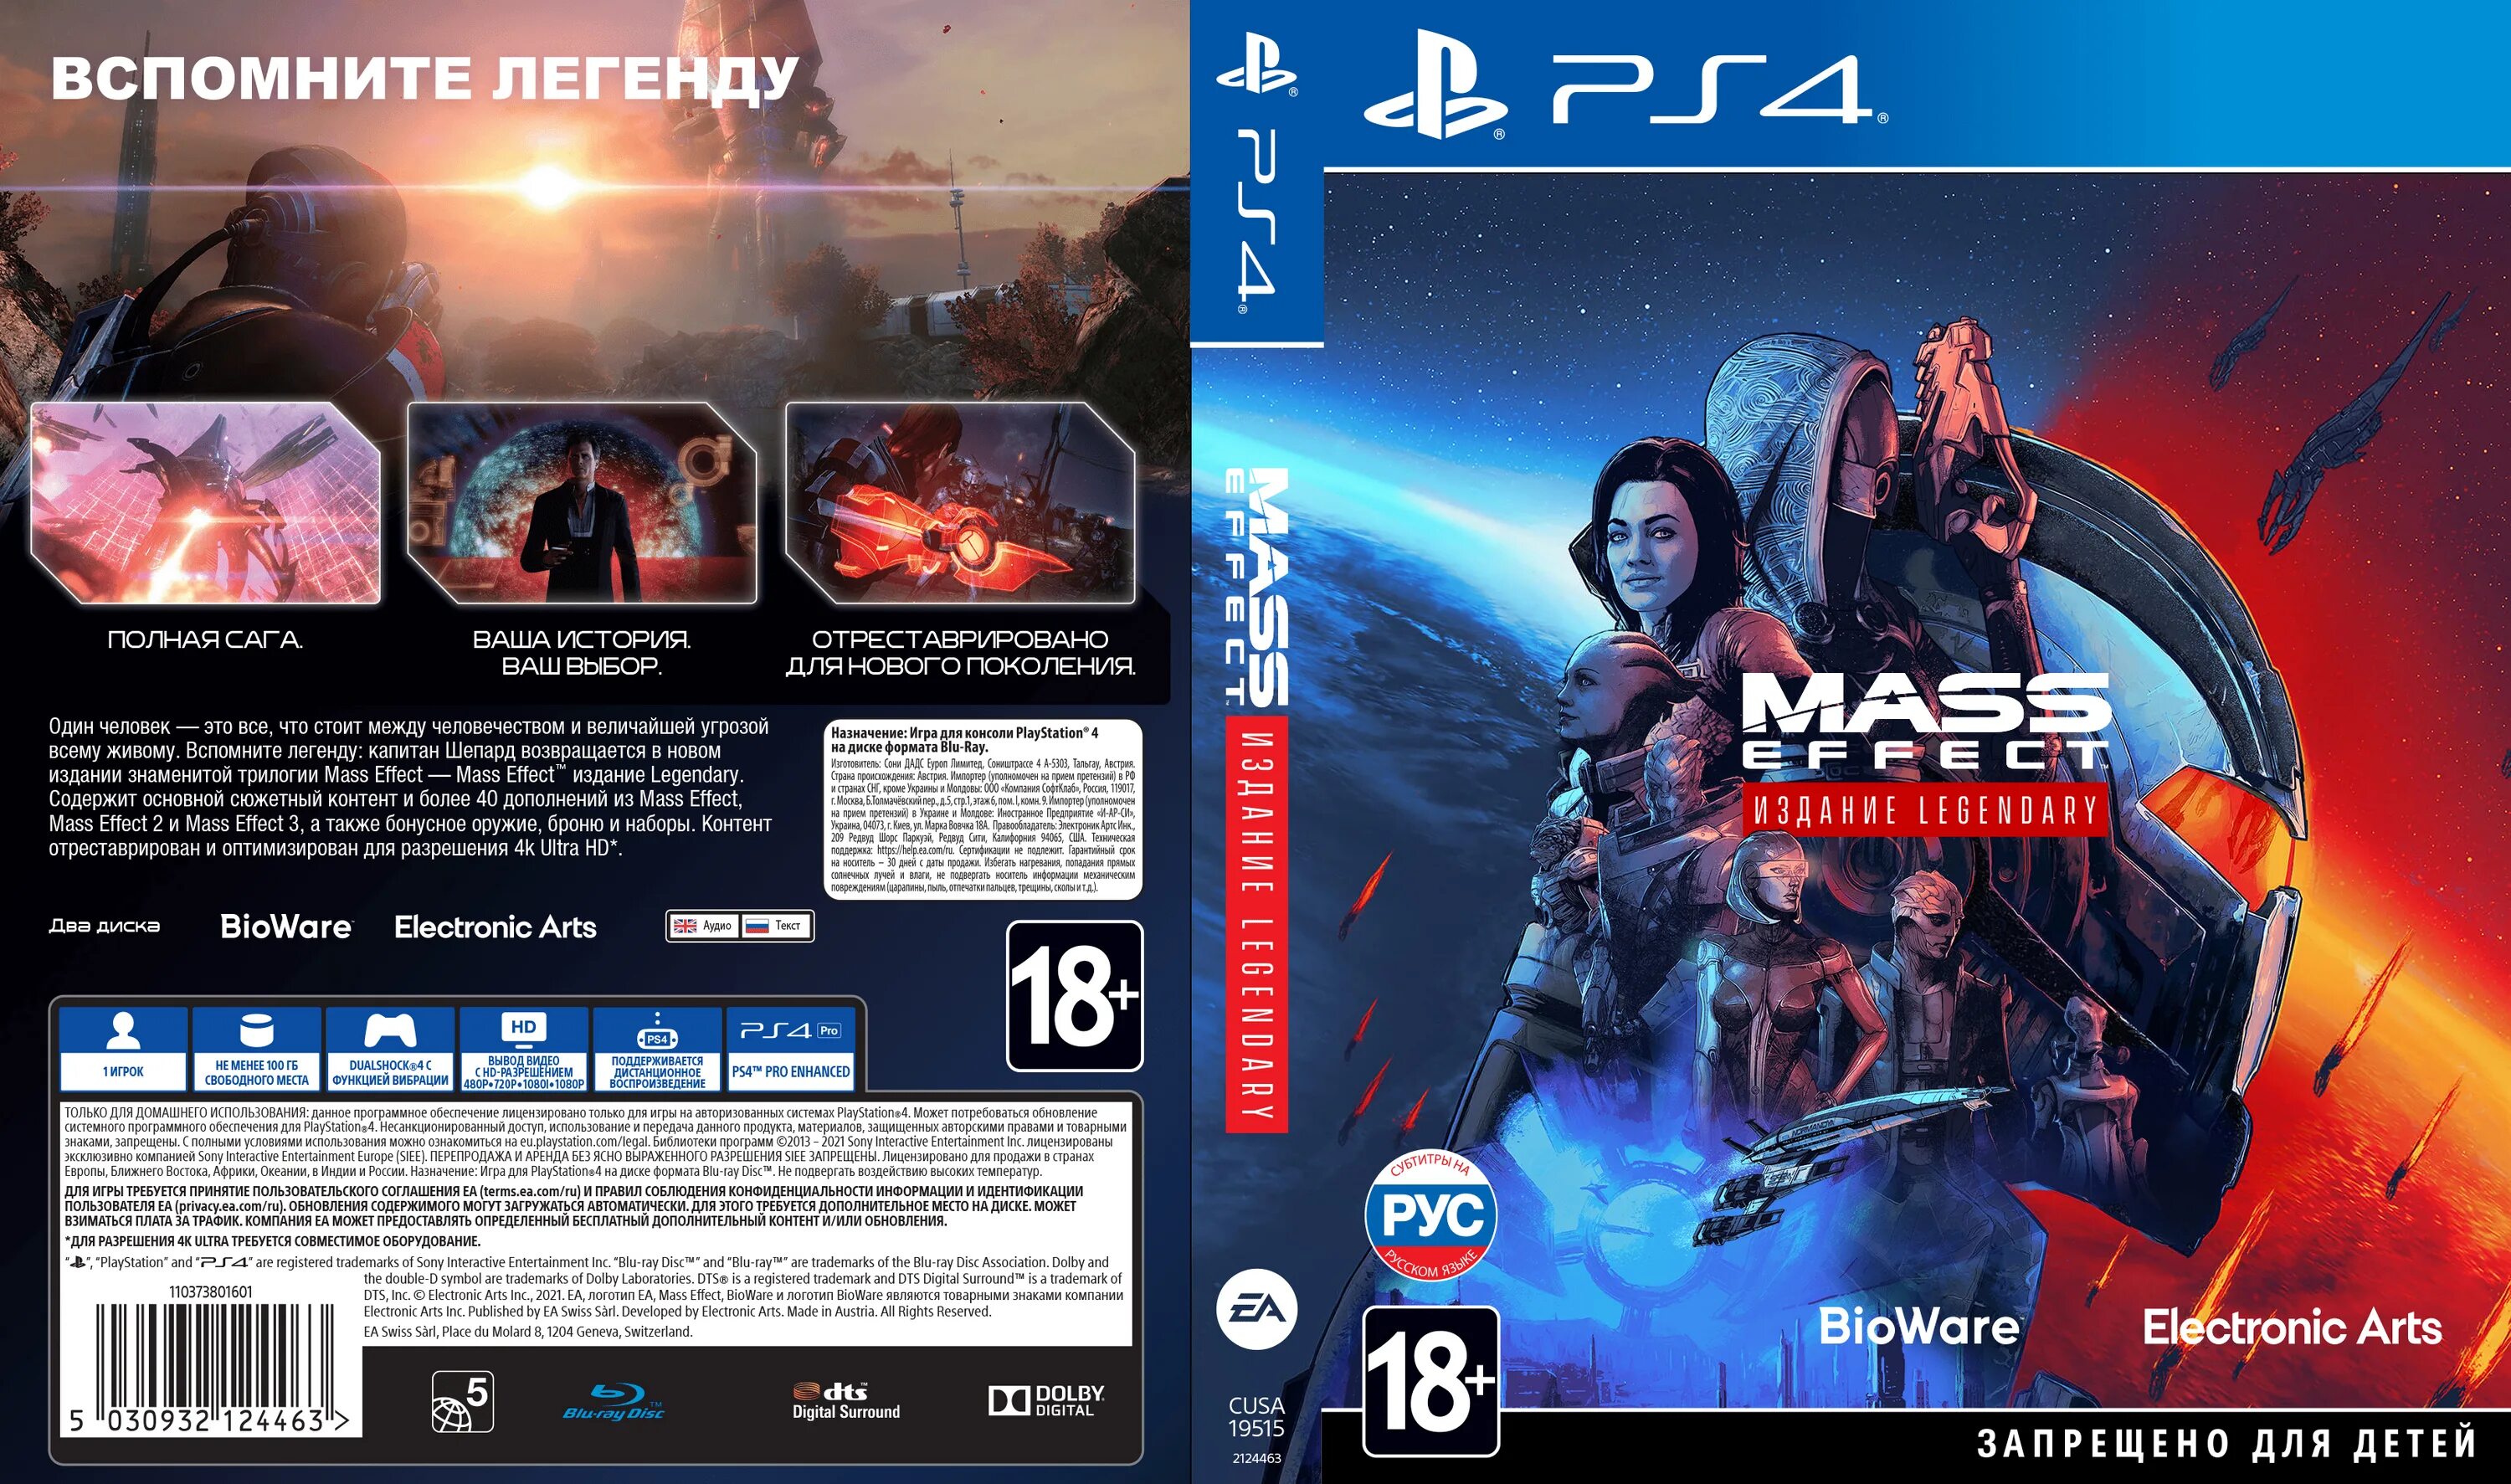 Масс вый. Mass Effect Legendary Edition обложка диска. Ps4 диск Mass Effect трилогия. Mass Effect Trilogy - Legendary Edition ps4. Диск ПС 4 Mass Effect.